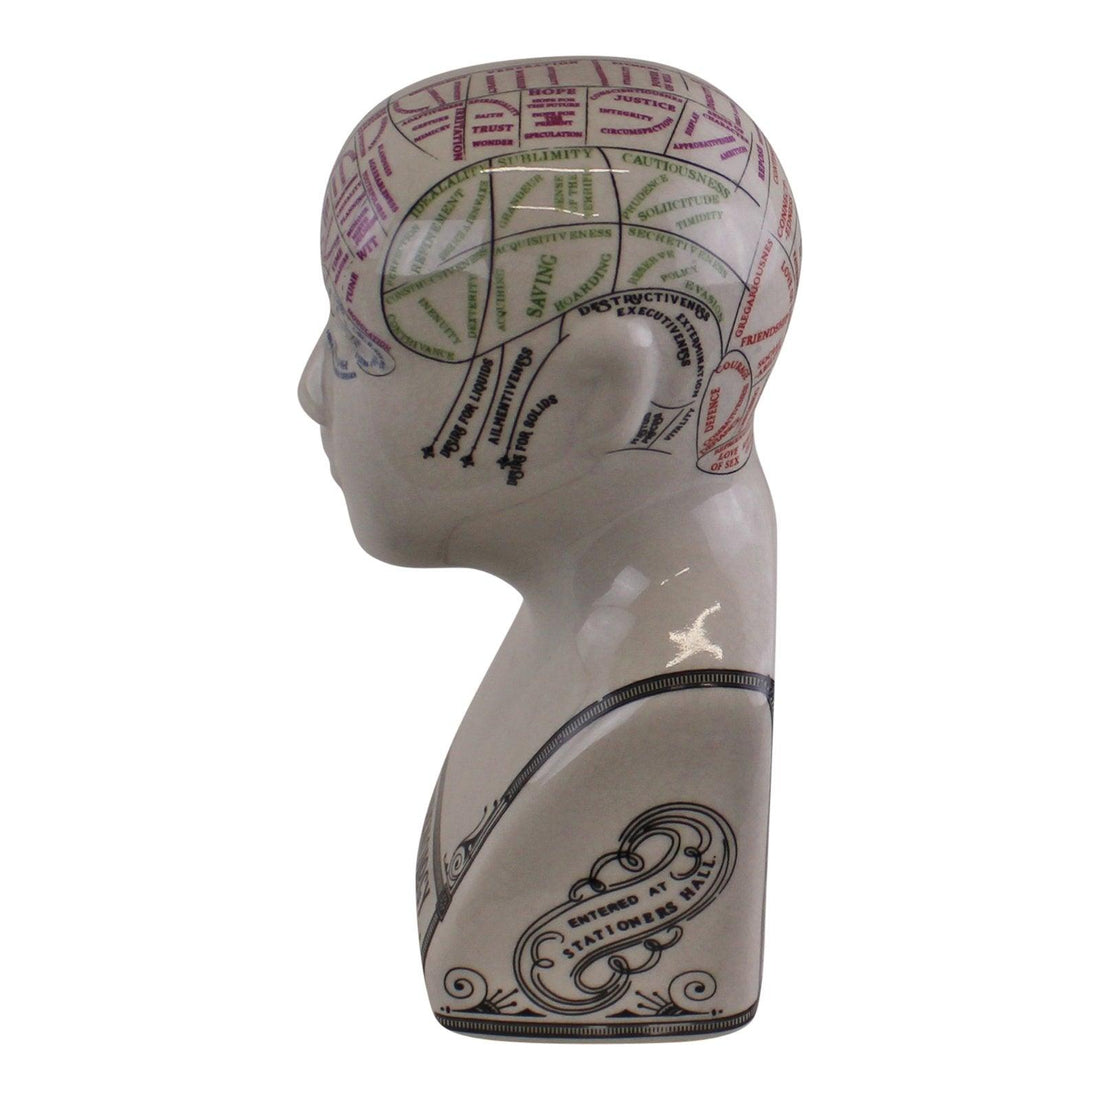 Small Ceramic Crackle Phrenology Head - £20.99 - Phrenology 